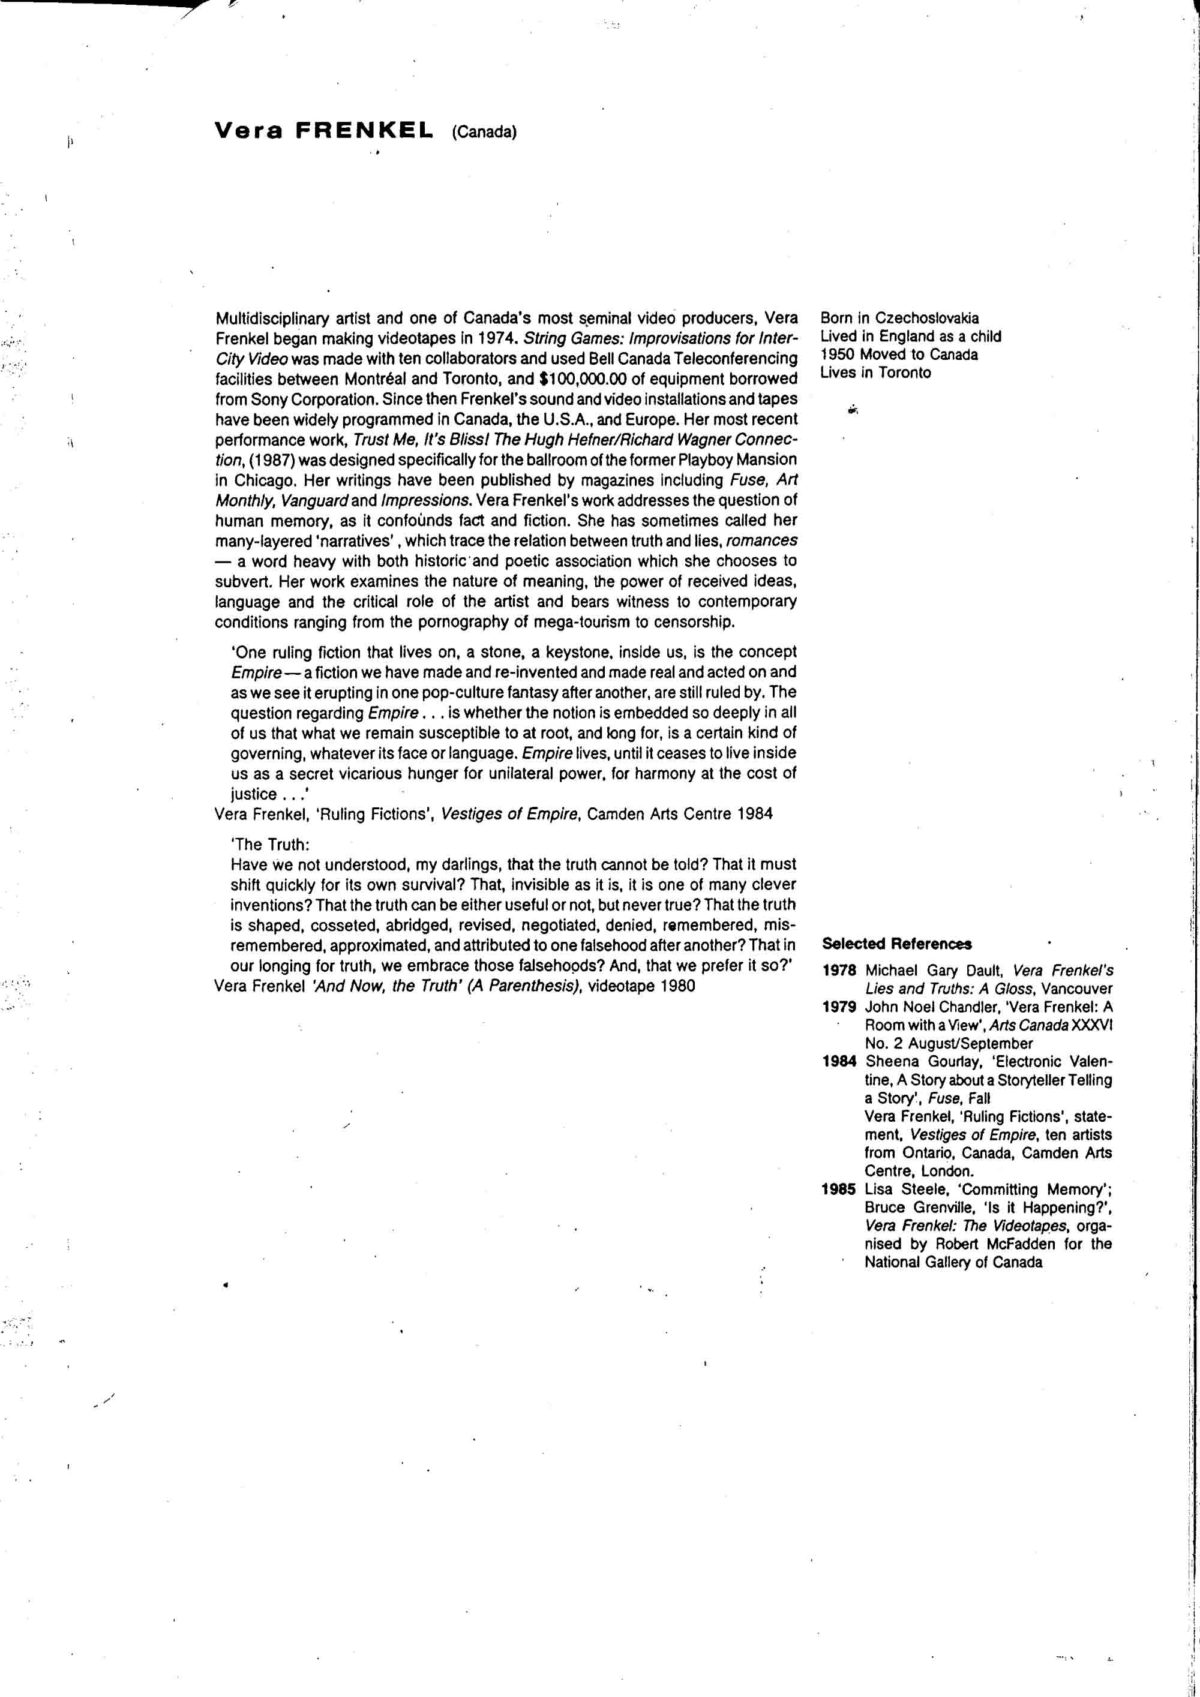 Vera Frenkel, Information Accompanying Pack, 1988 (Page 5 of 19)